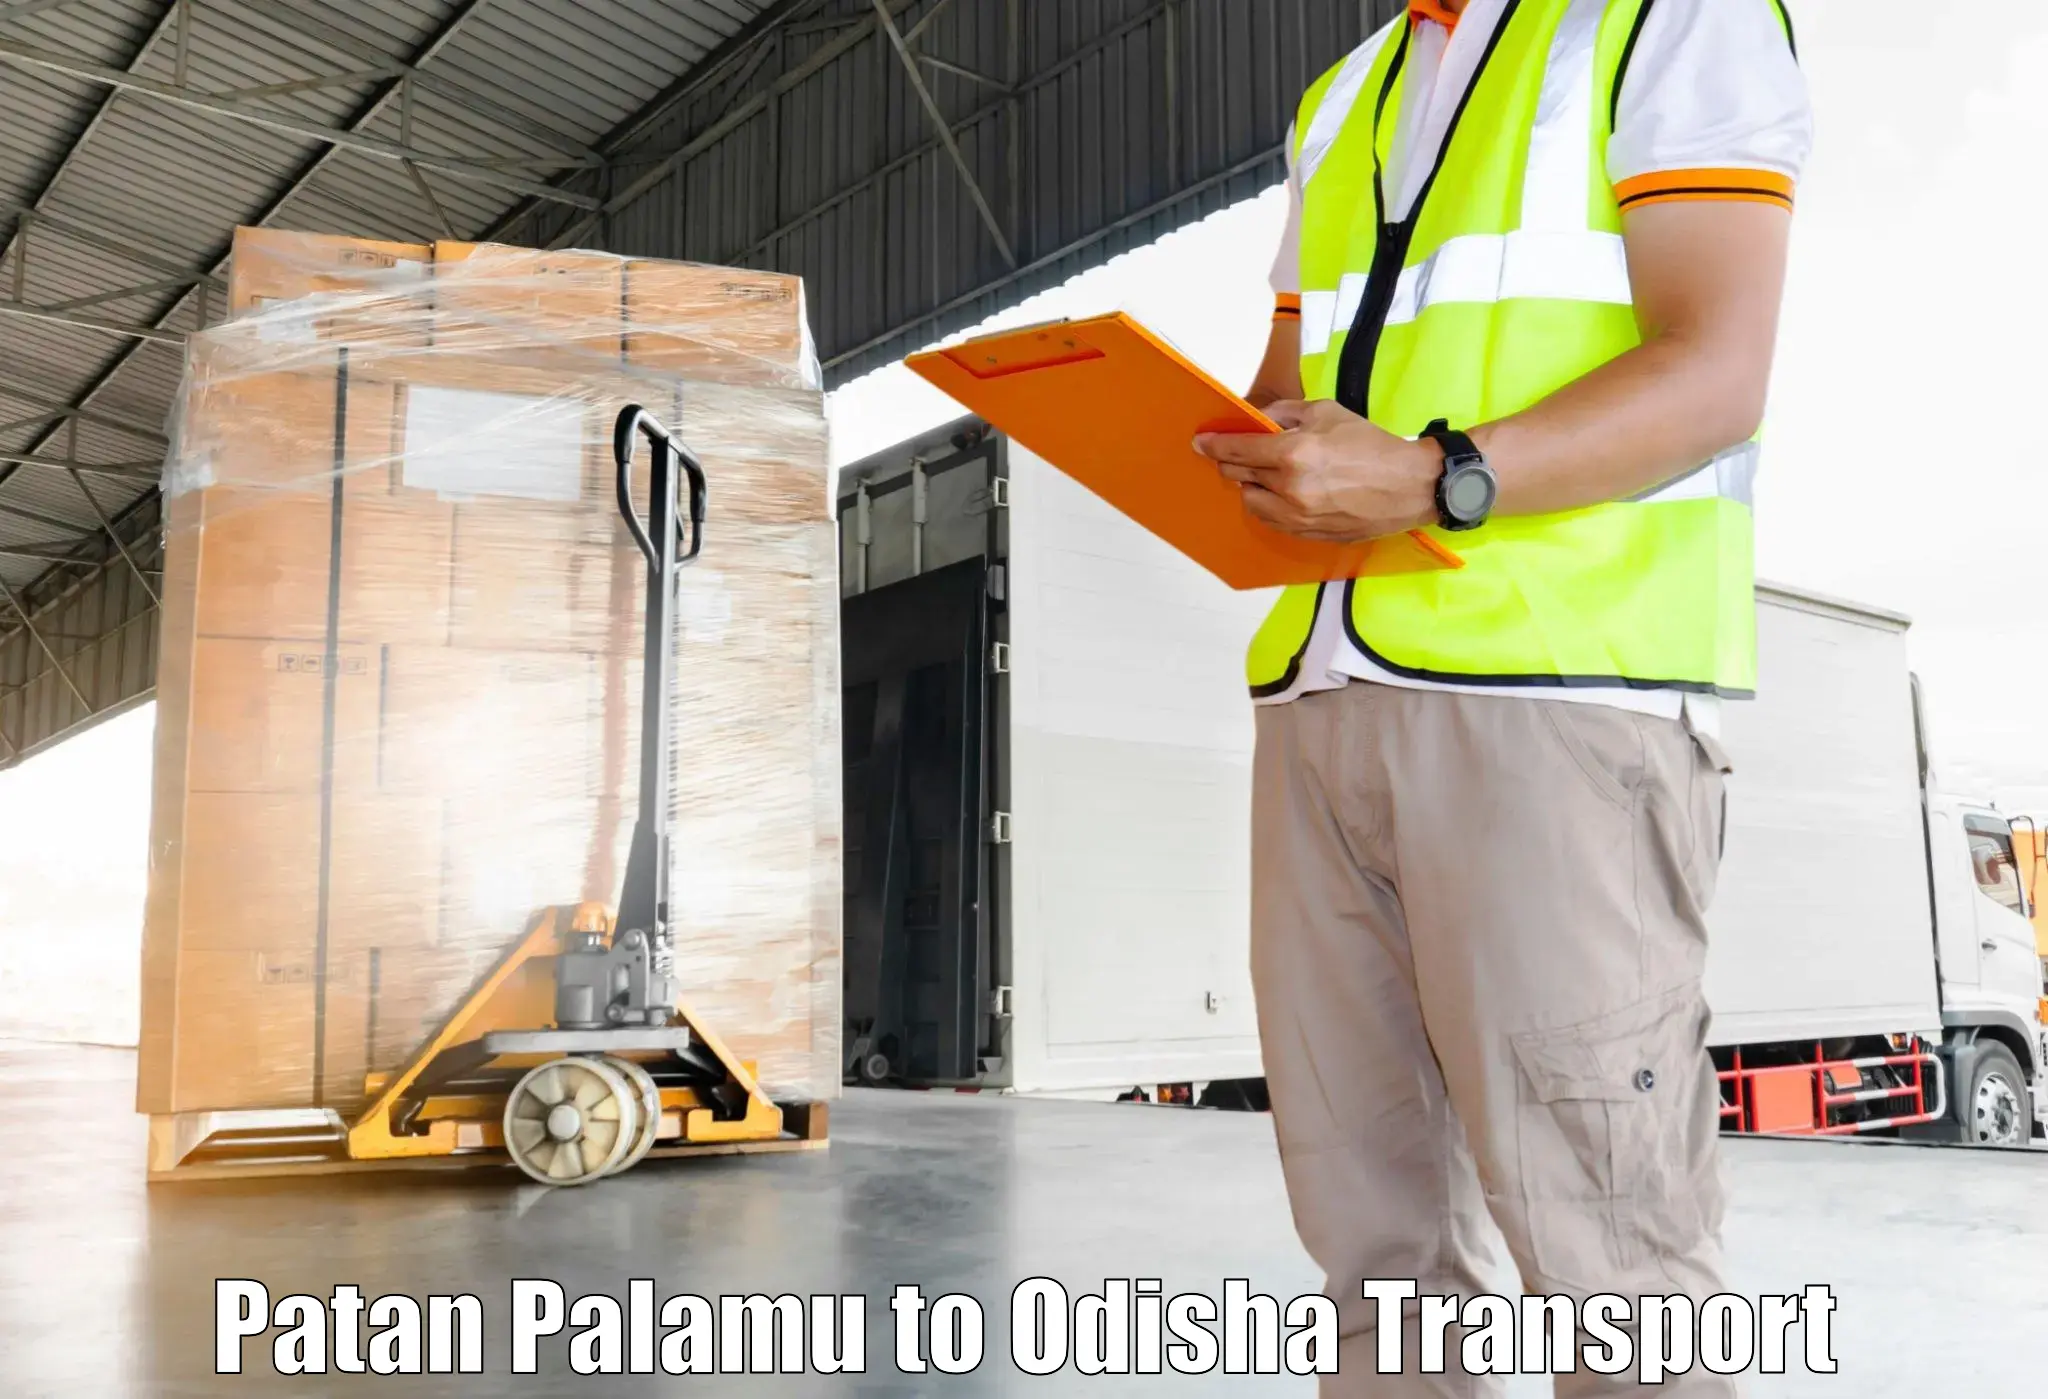 Truck transport companies in India Patan Palamu to Angul